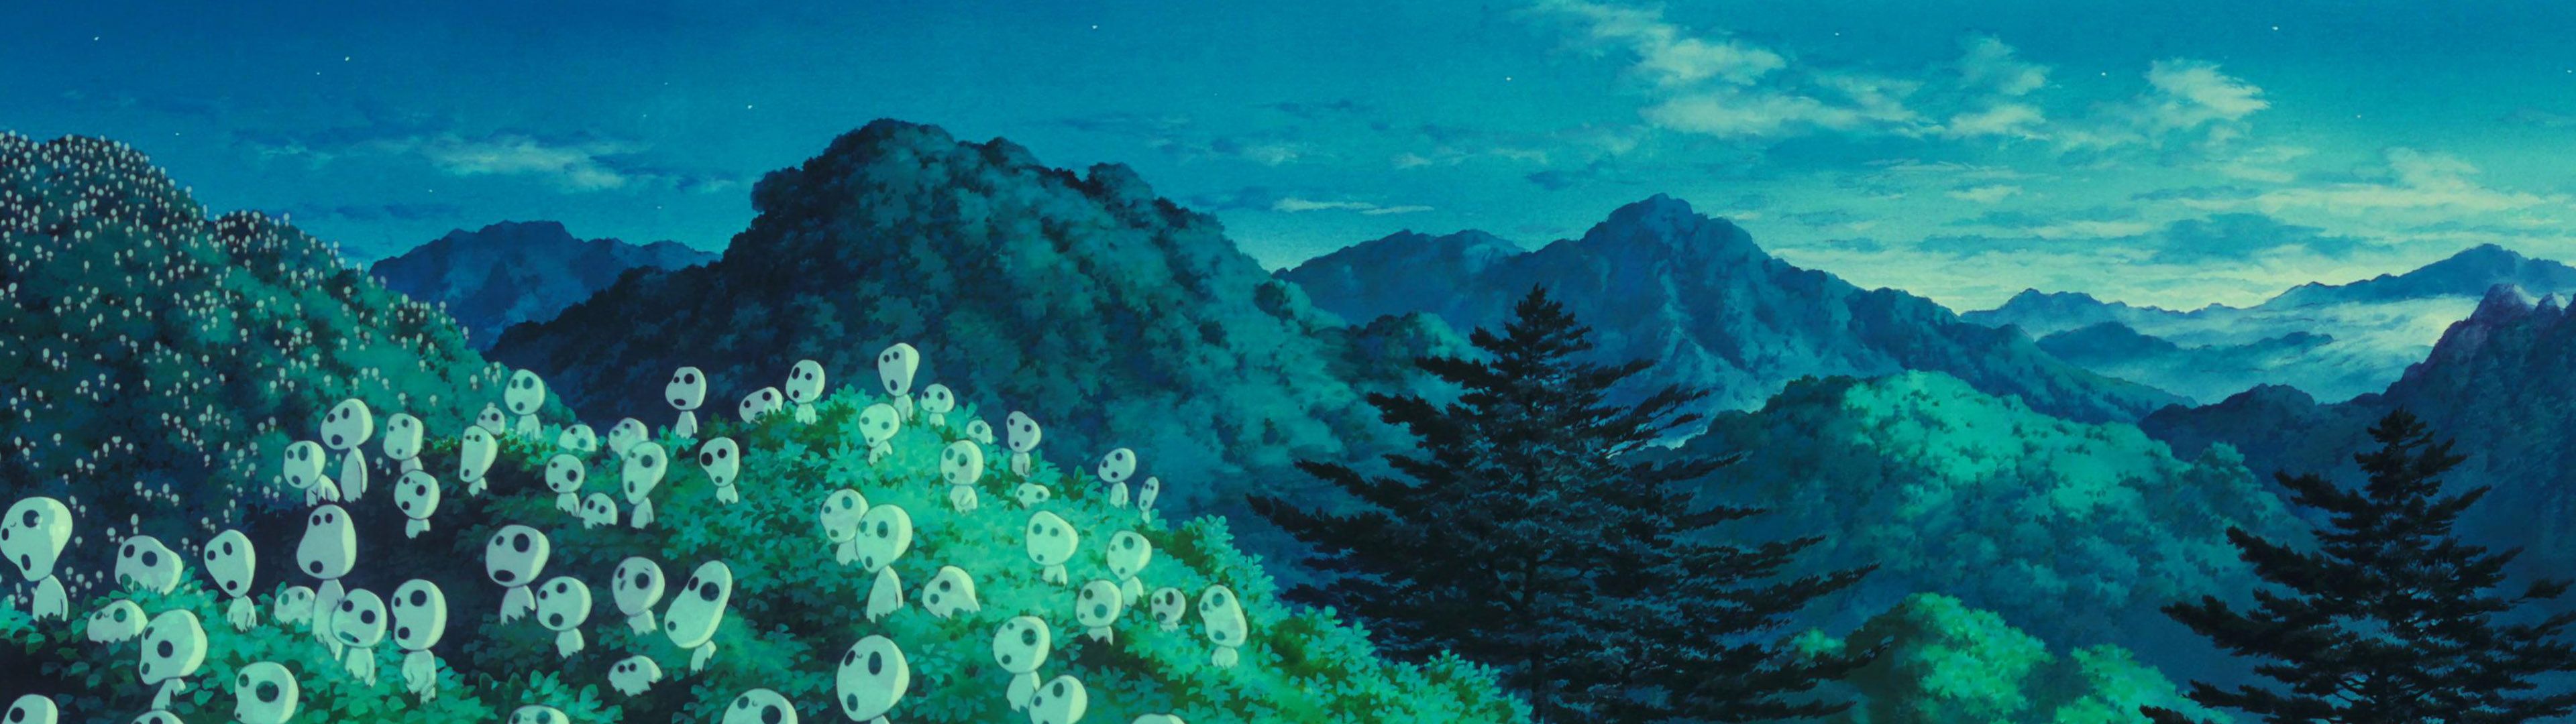 dual studio ghibli wallpaper Archives - Studio Ghibli Movies